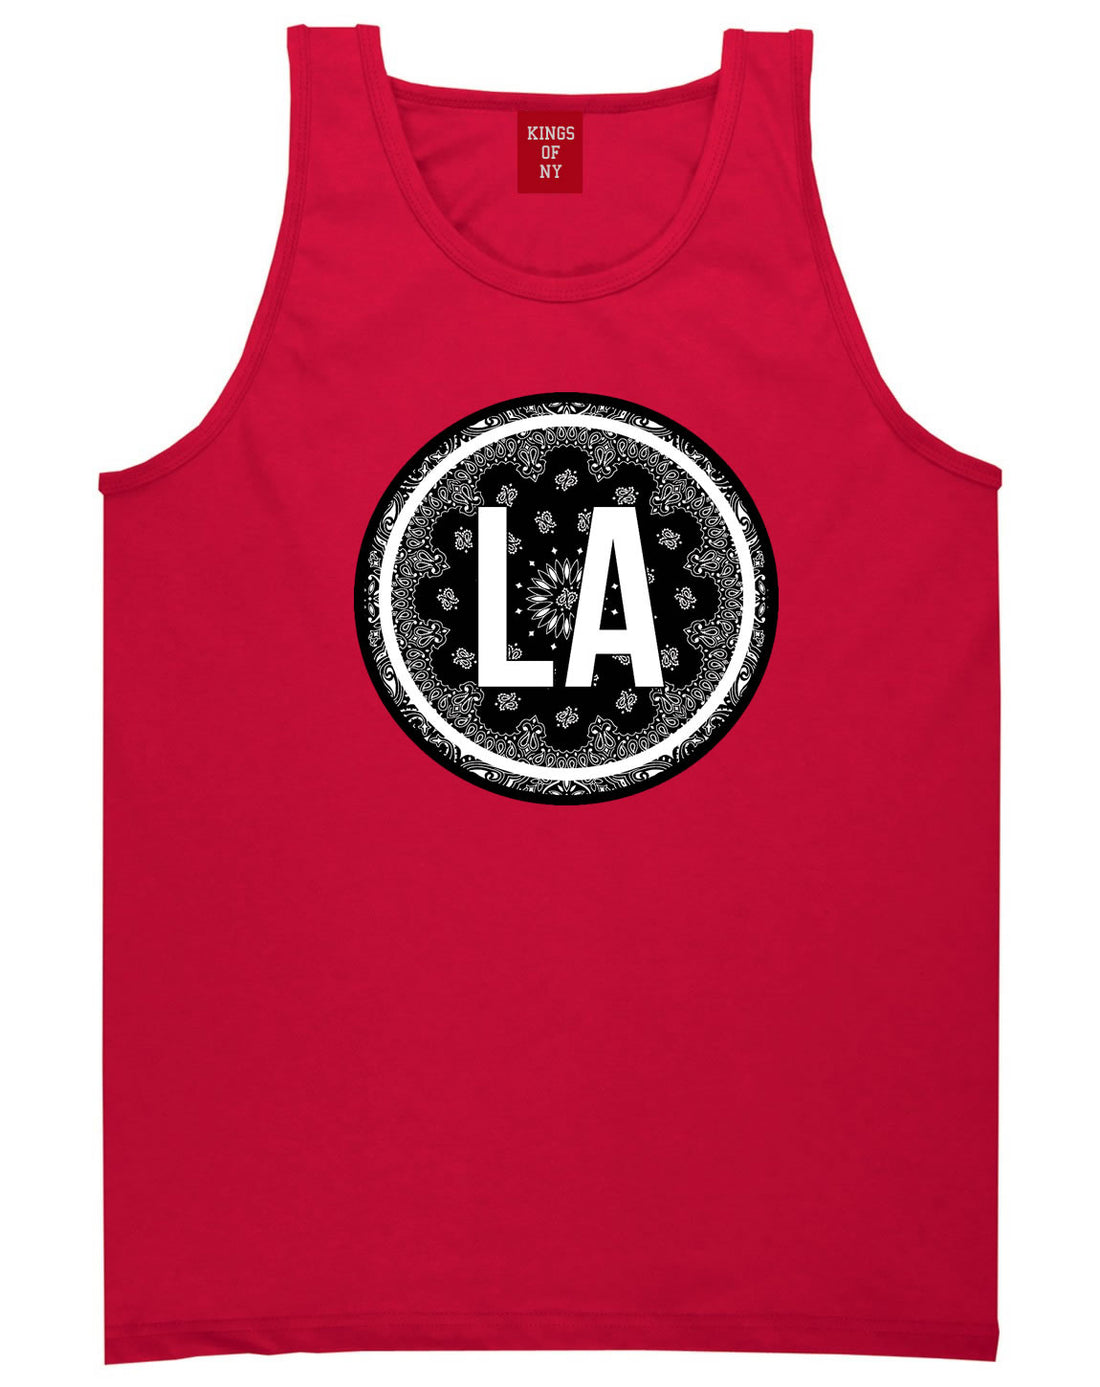 Kings Of NY La Los Angeles Cali California Bandana Tank Top in Red